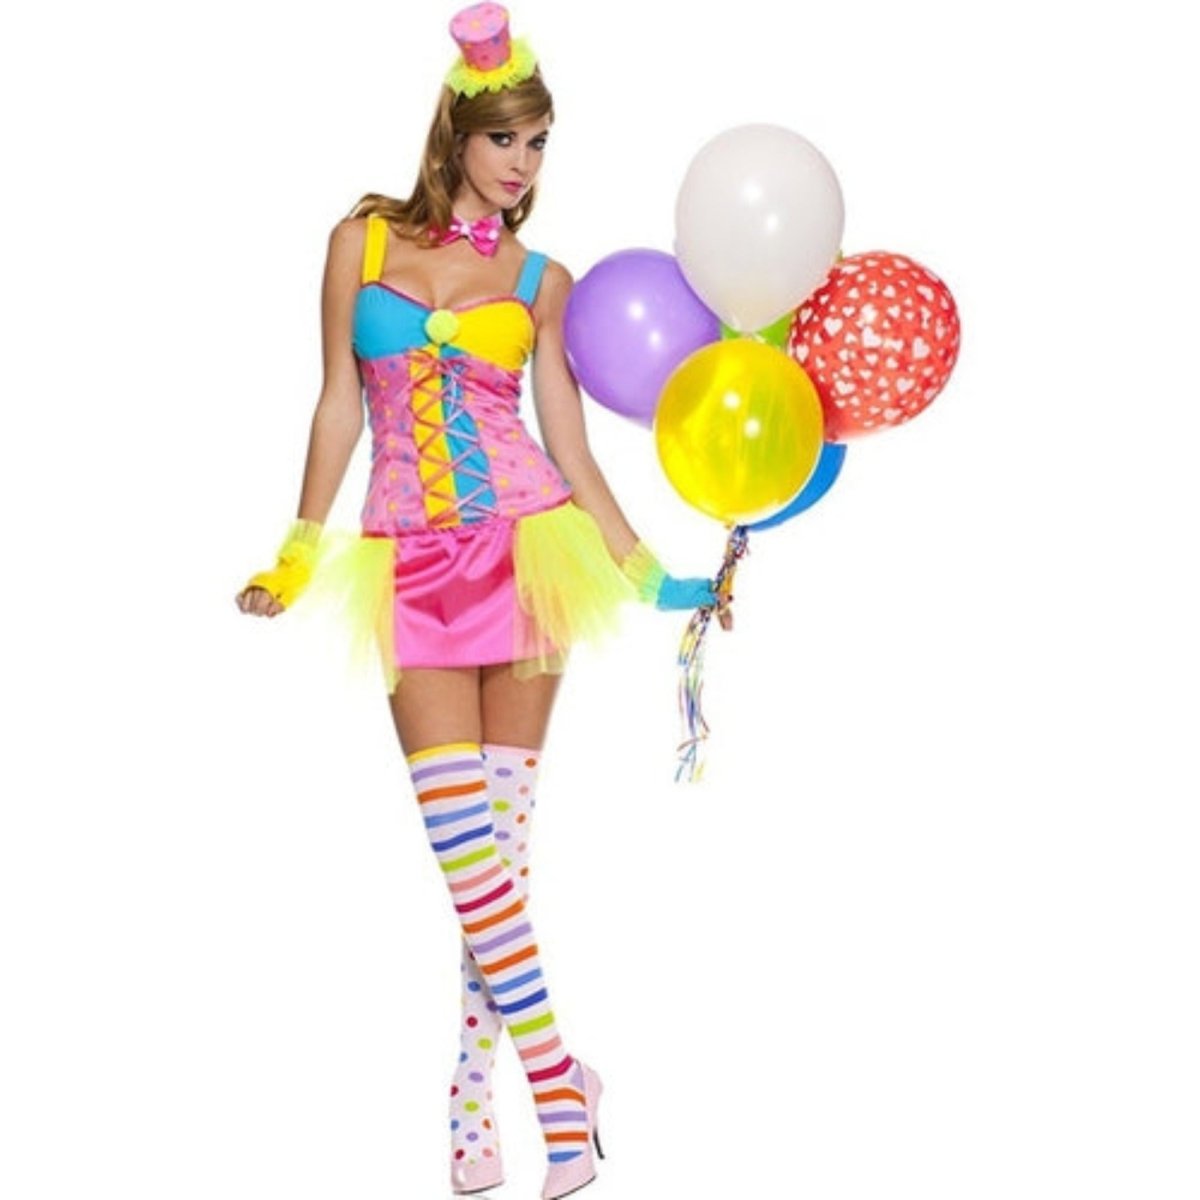 Miss Clowning Around Costume - worldclasscostumes